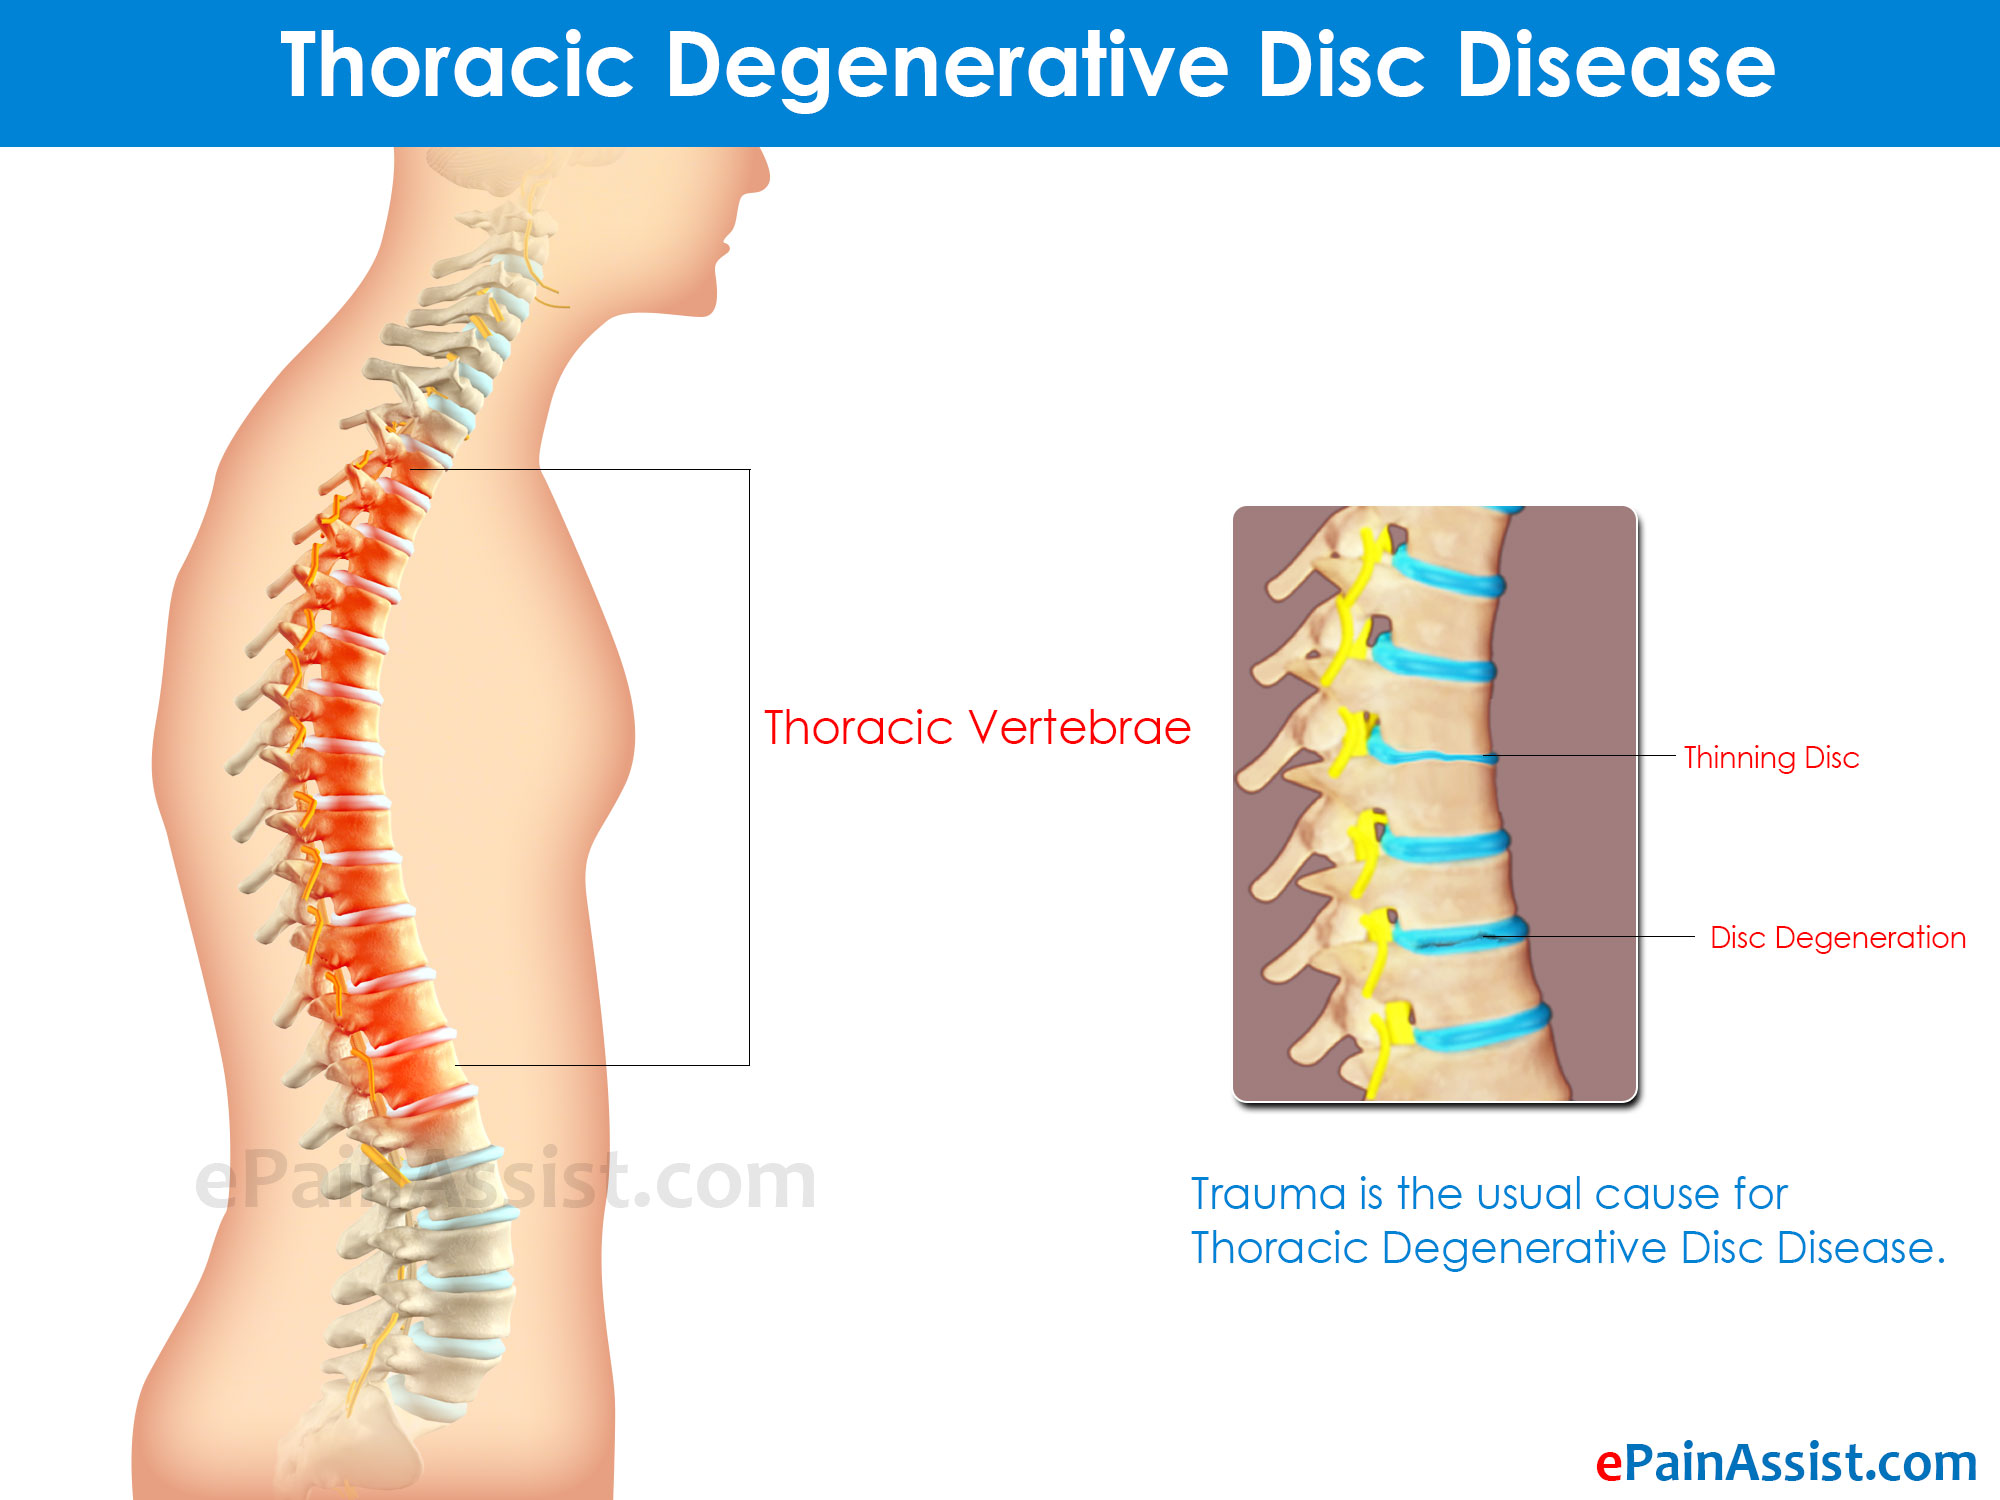 Types of Degenerative Disc Disease